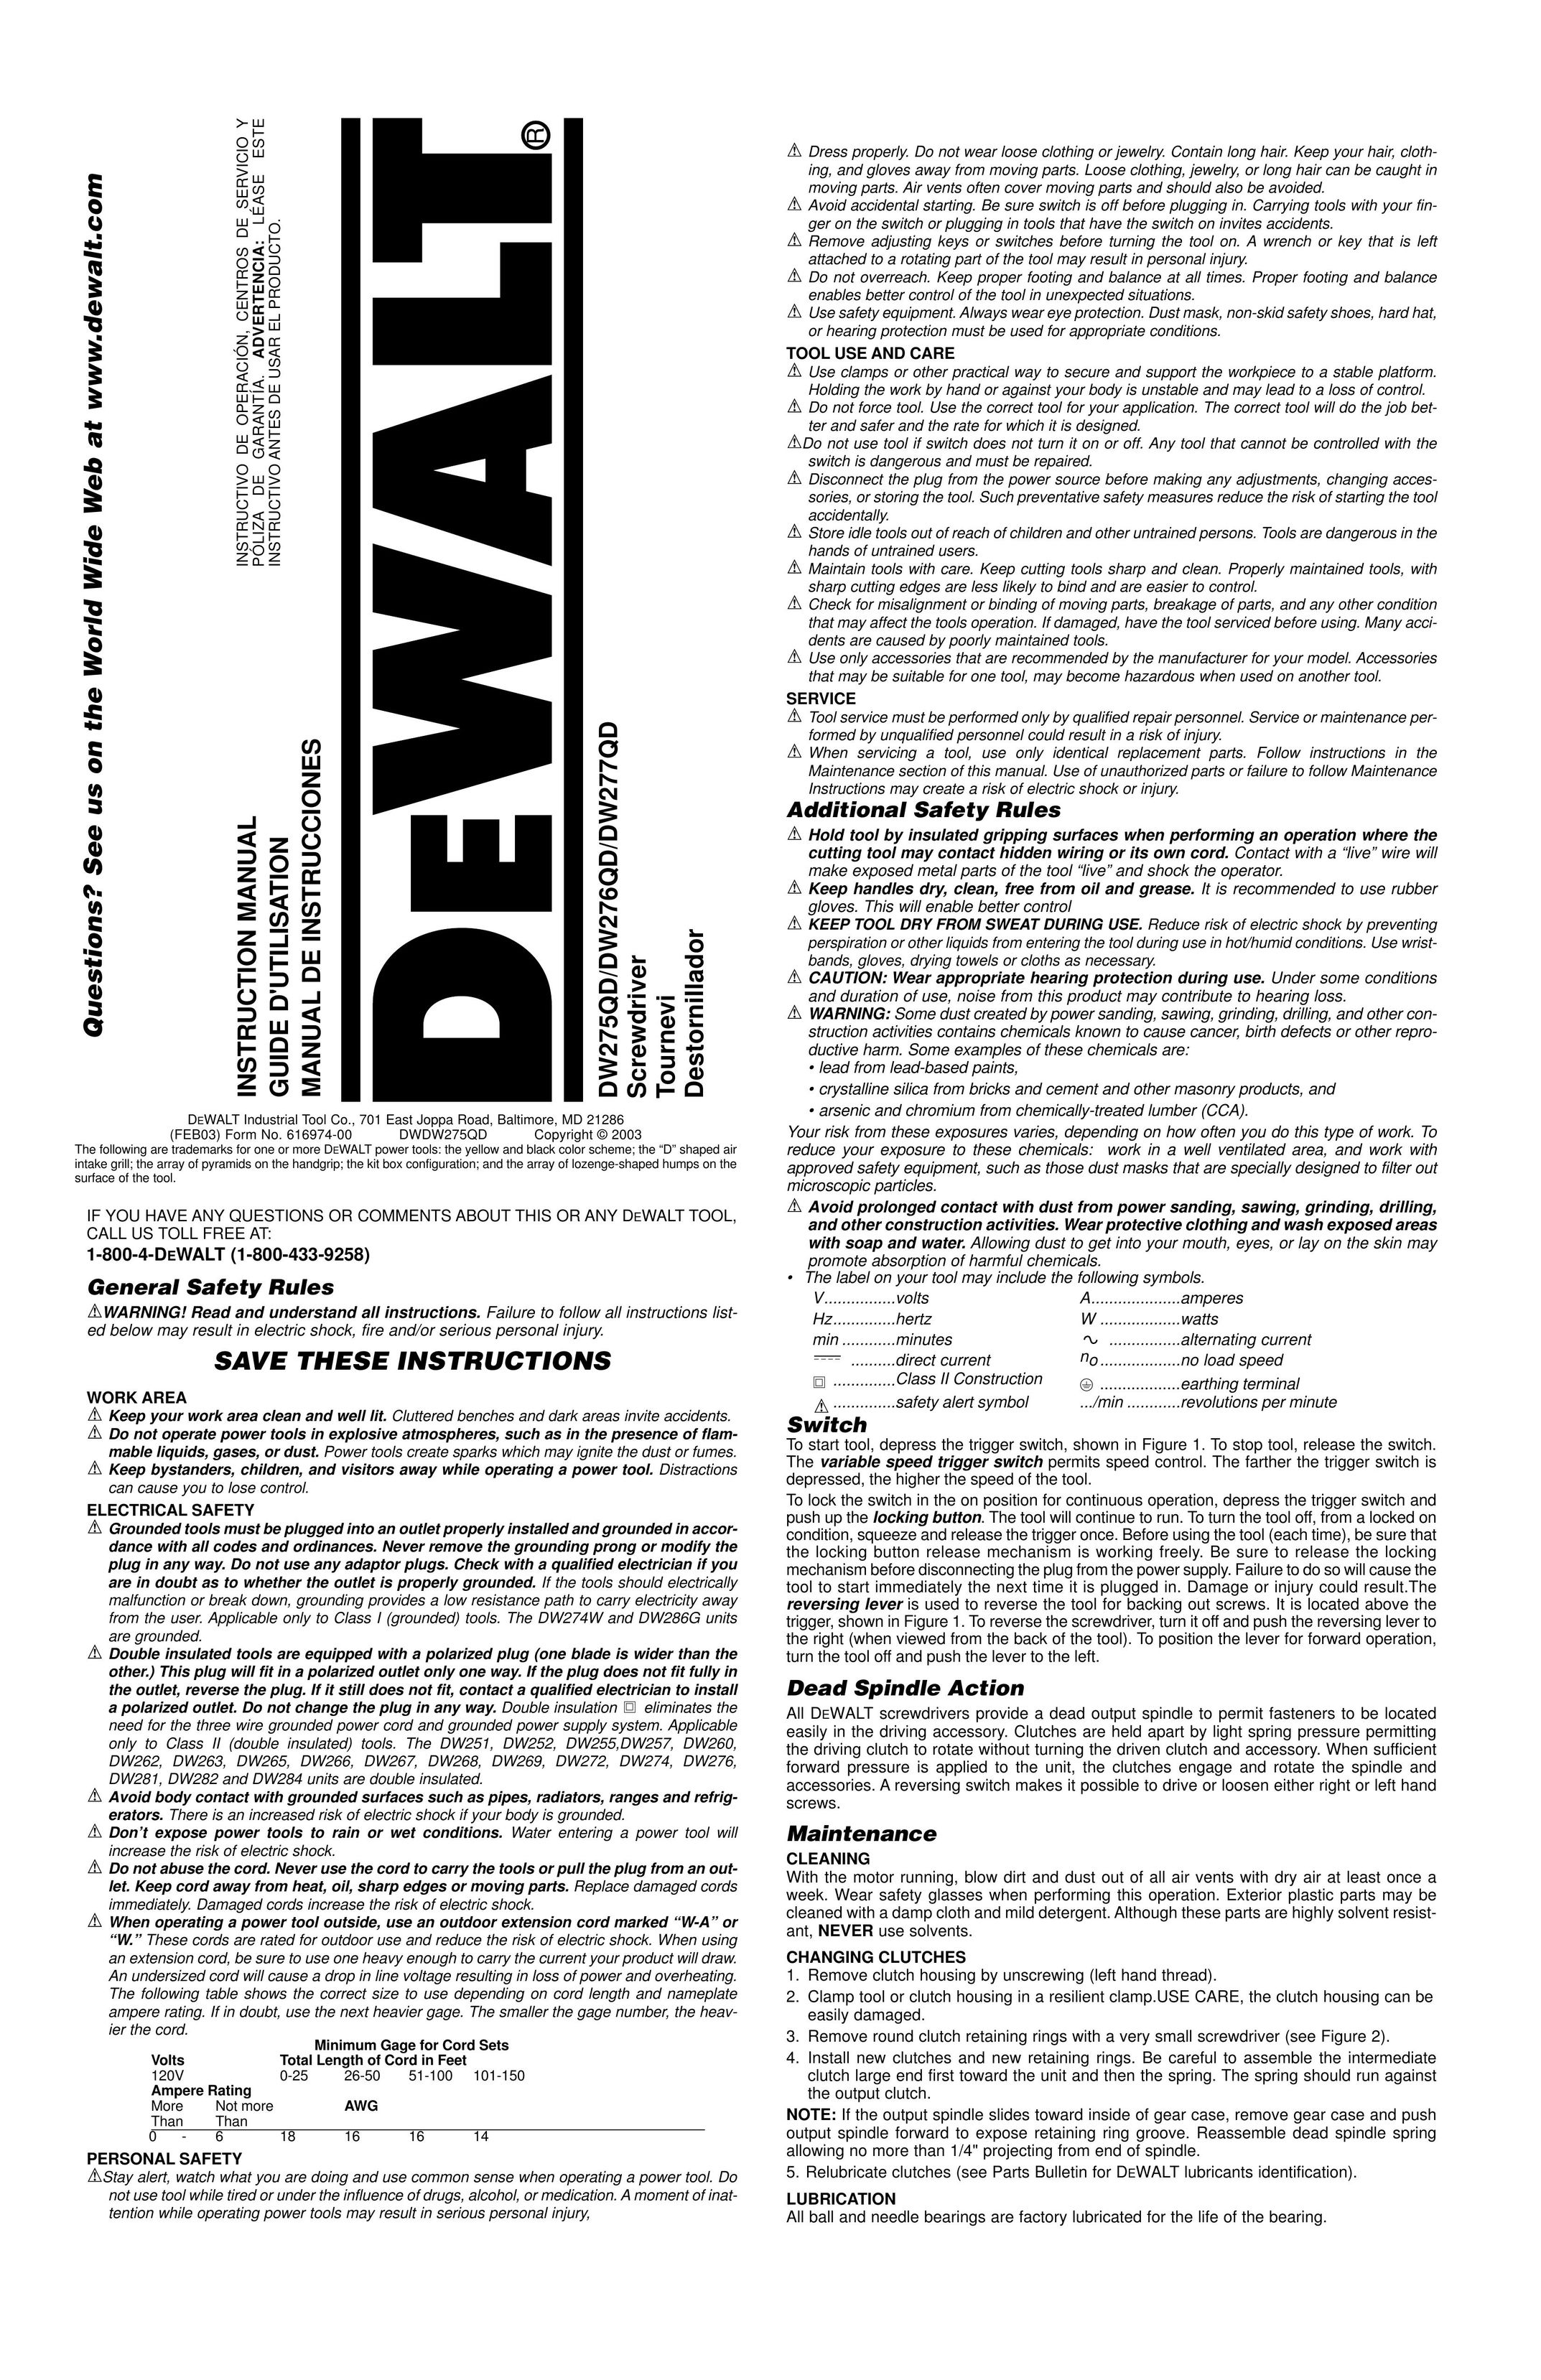 DeWalt DW276QD Power Screwdriver User Manual